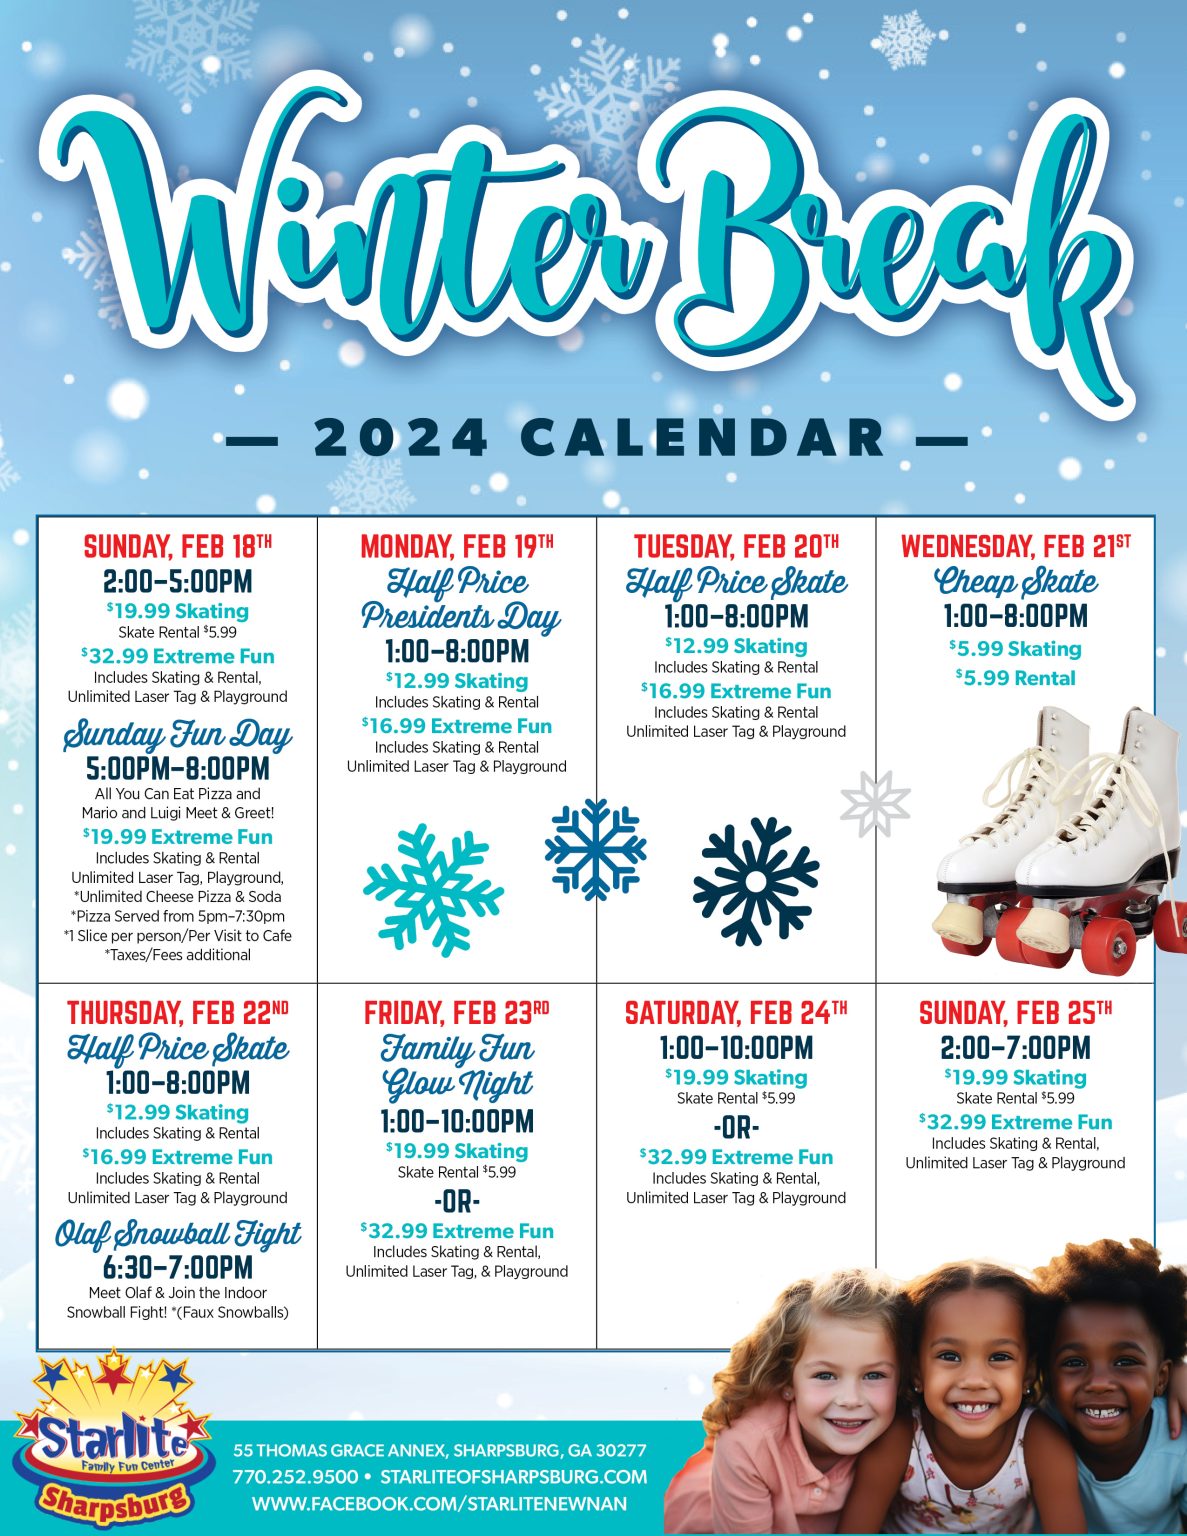 GA23-052 Winter Break Calendar-Sharpsburg-2